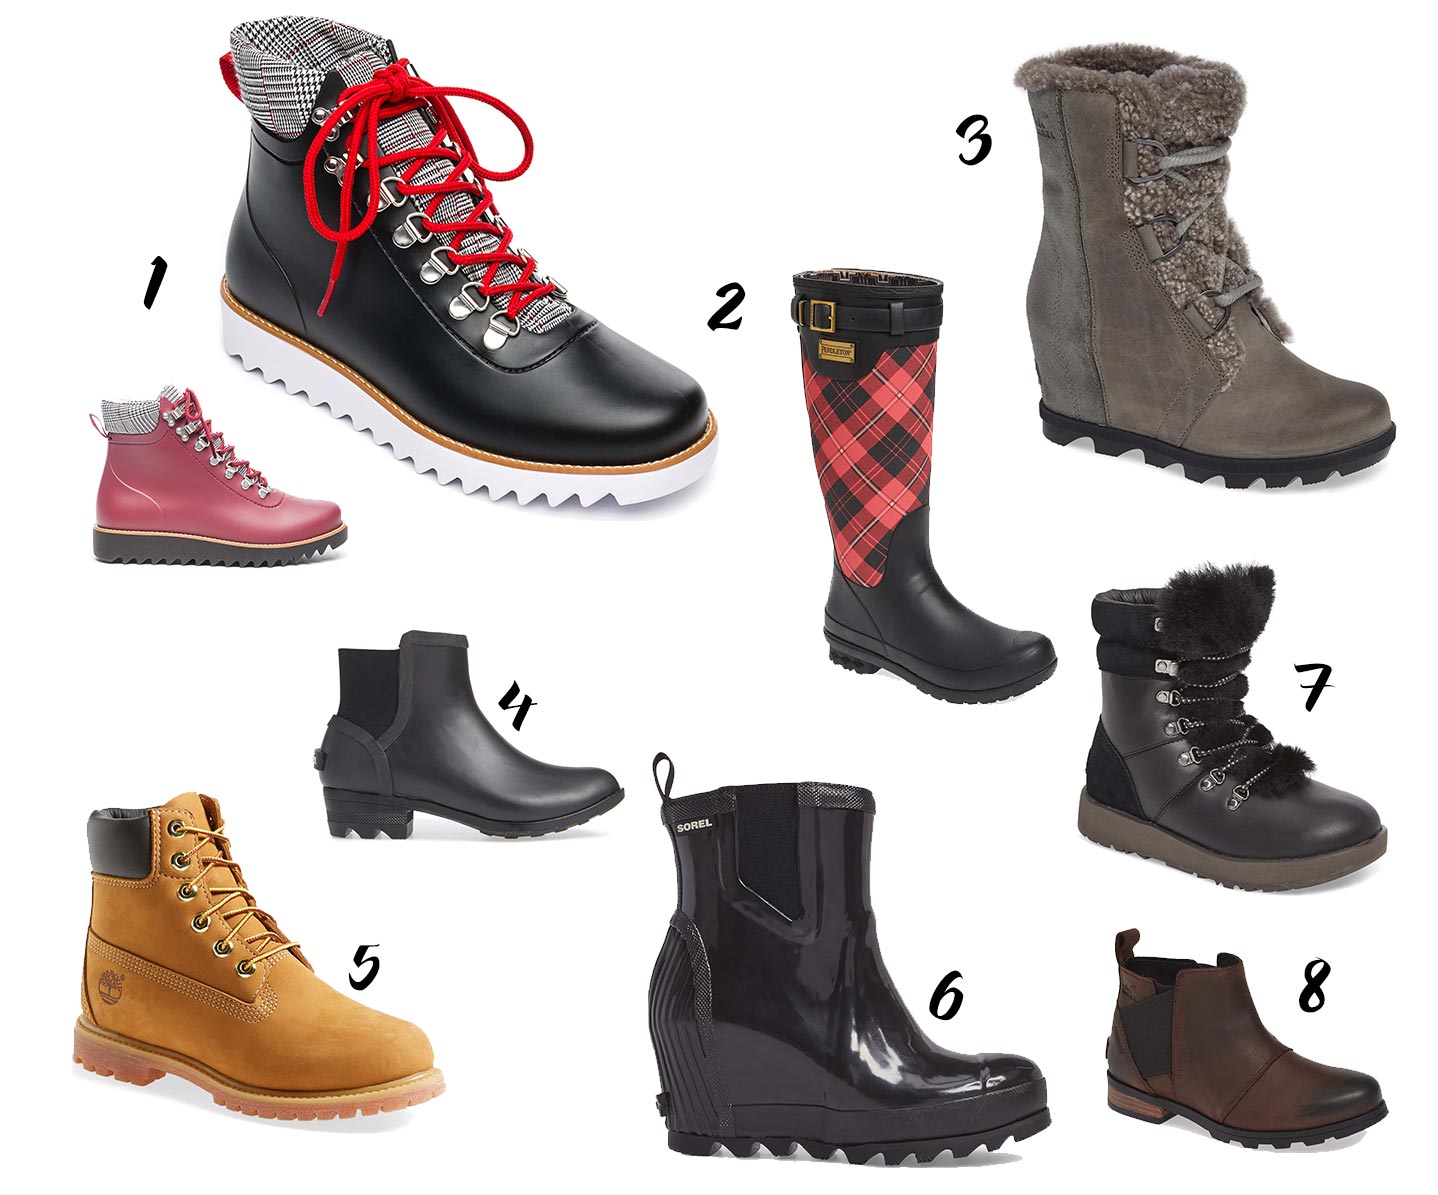 8 women's rain boots for fall